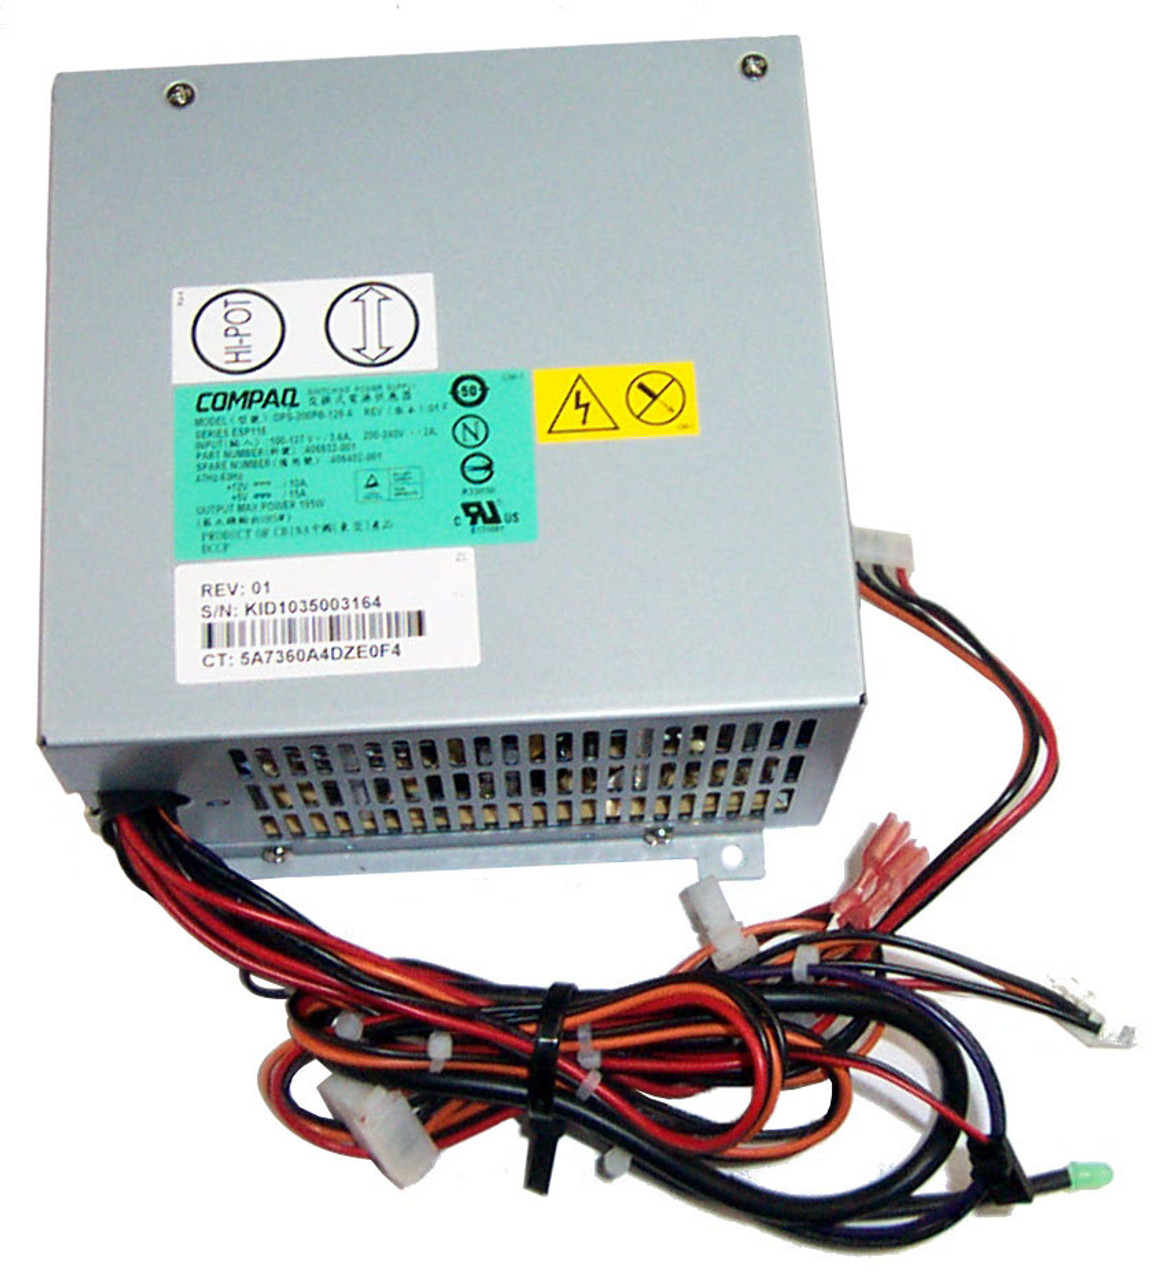 DPS-200PB-55 Compaq 200-Watts ATX AC Power Supply with PFC